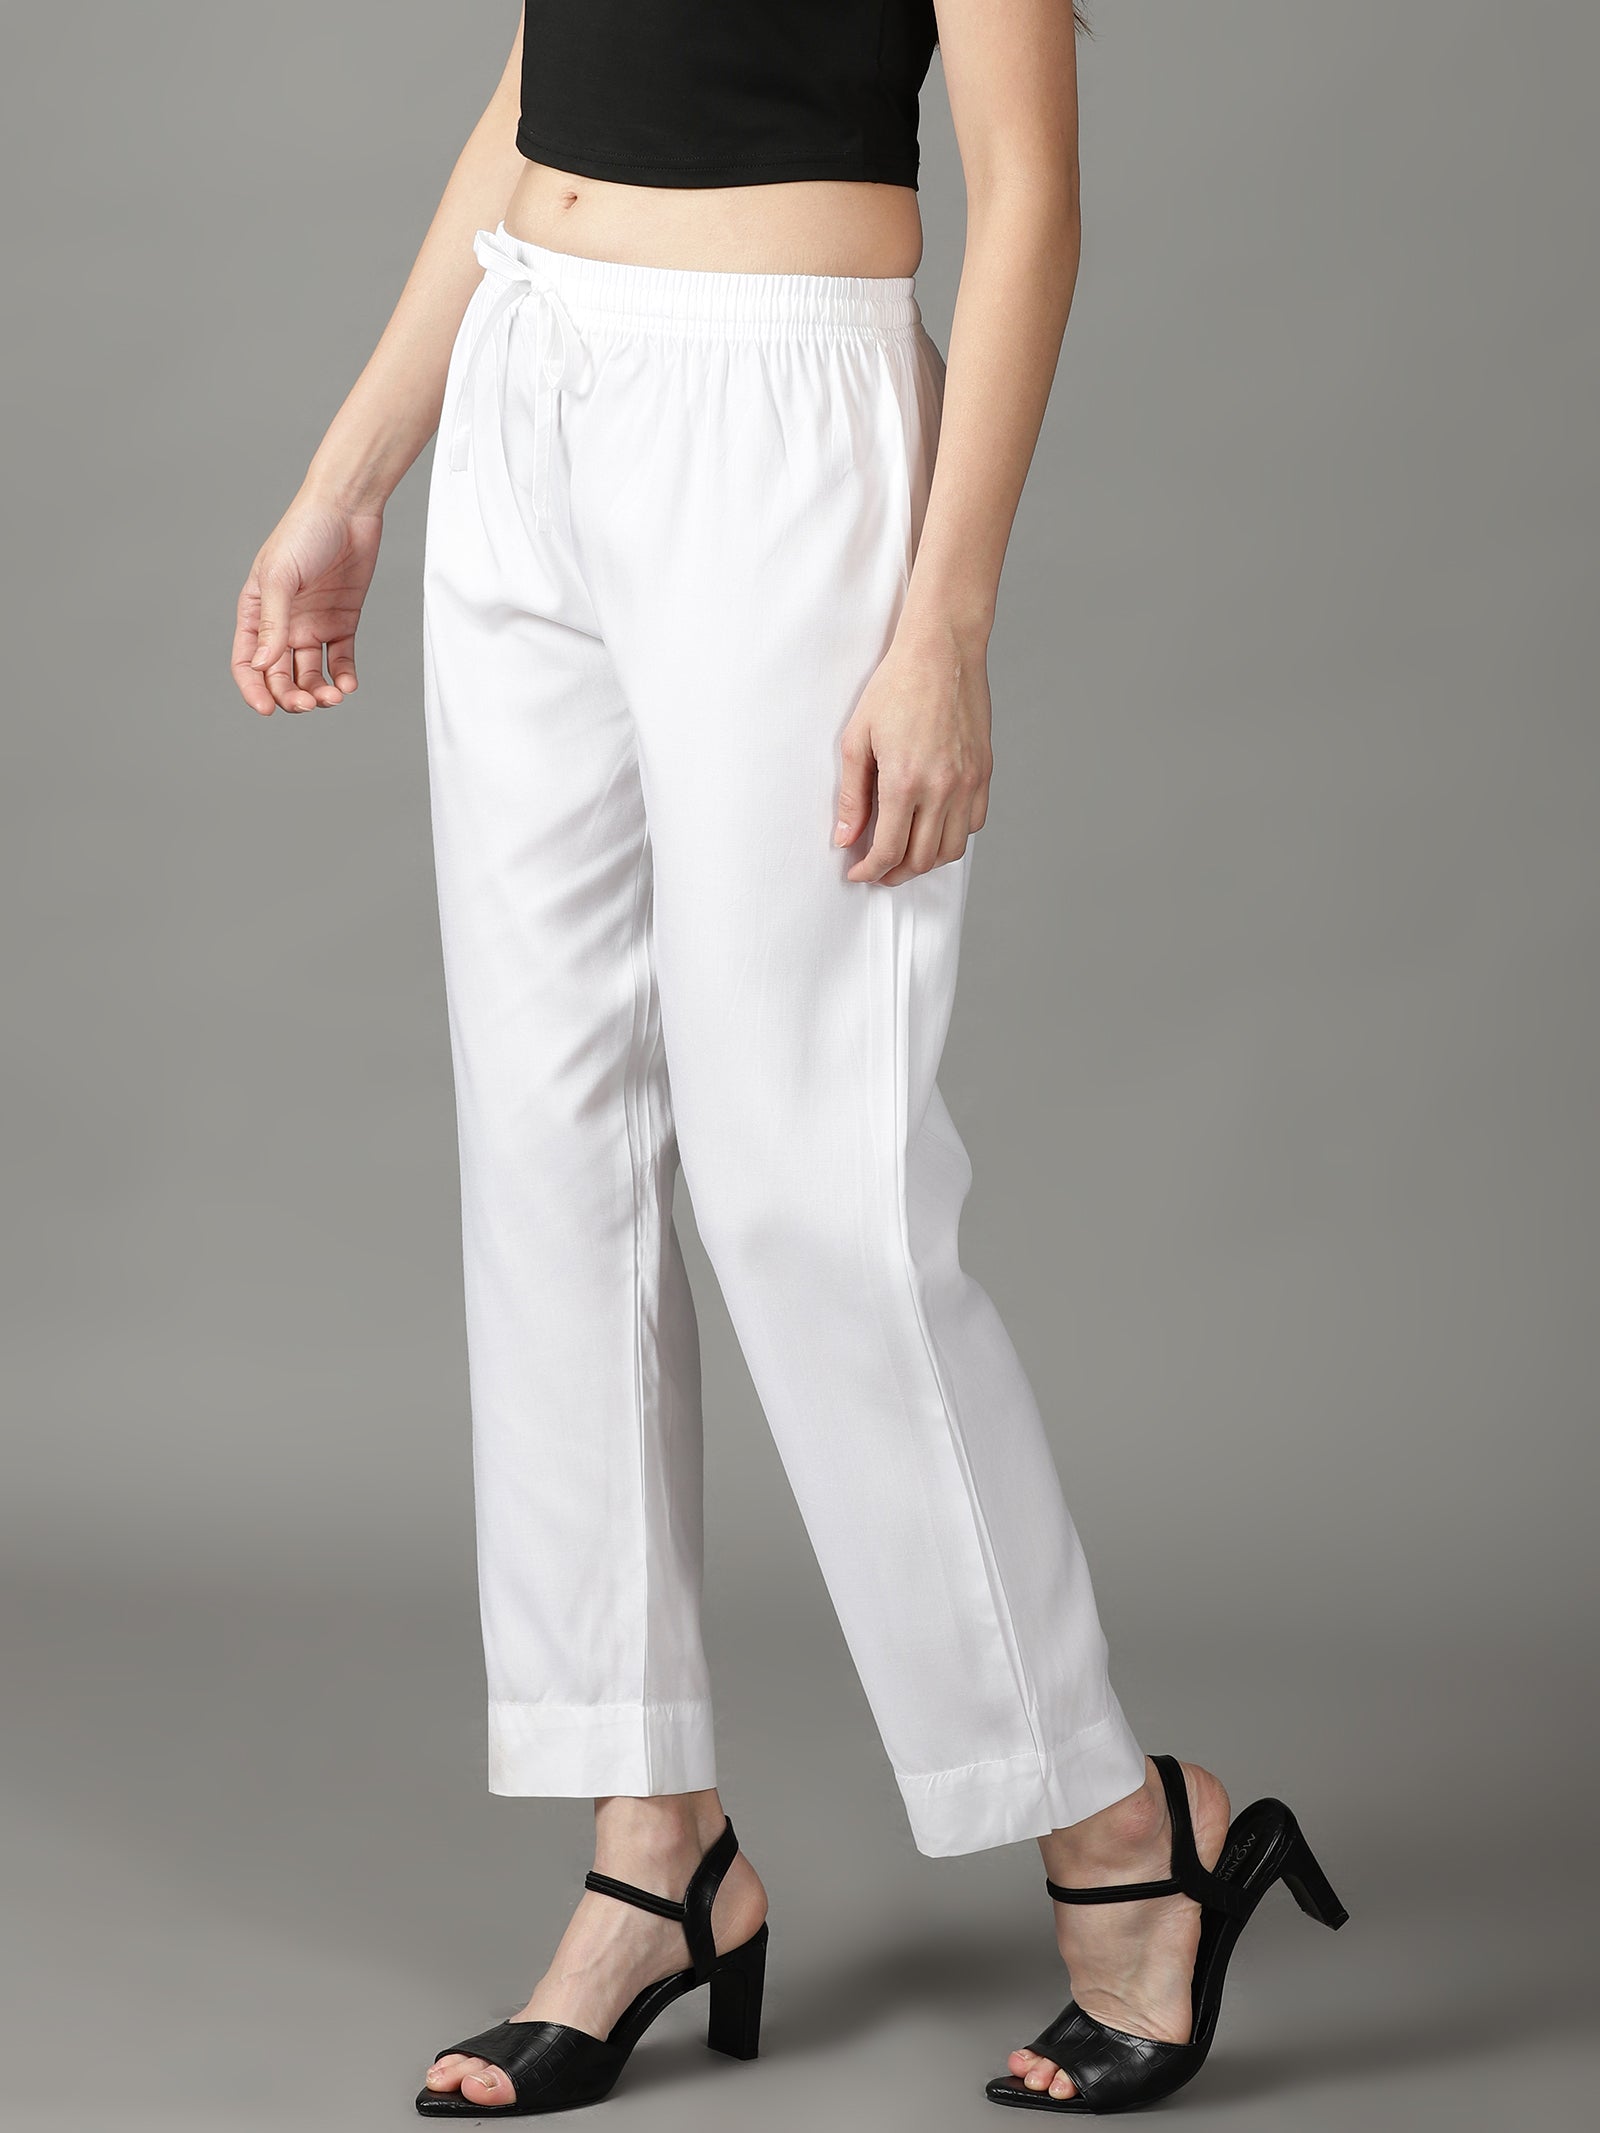 Fashion (White)High Waist Double-layer Chiffon Wide-leg Pants Trousers  Flared Pants Women's Skirt Pants Trousers Dance Pants DOU @ Best Price  Online | Jumia Egypt